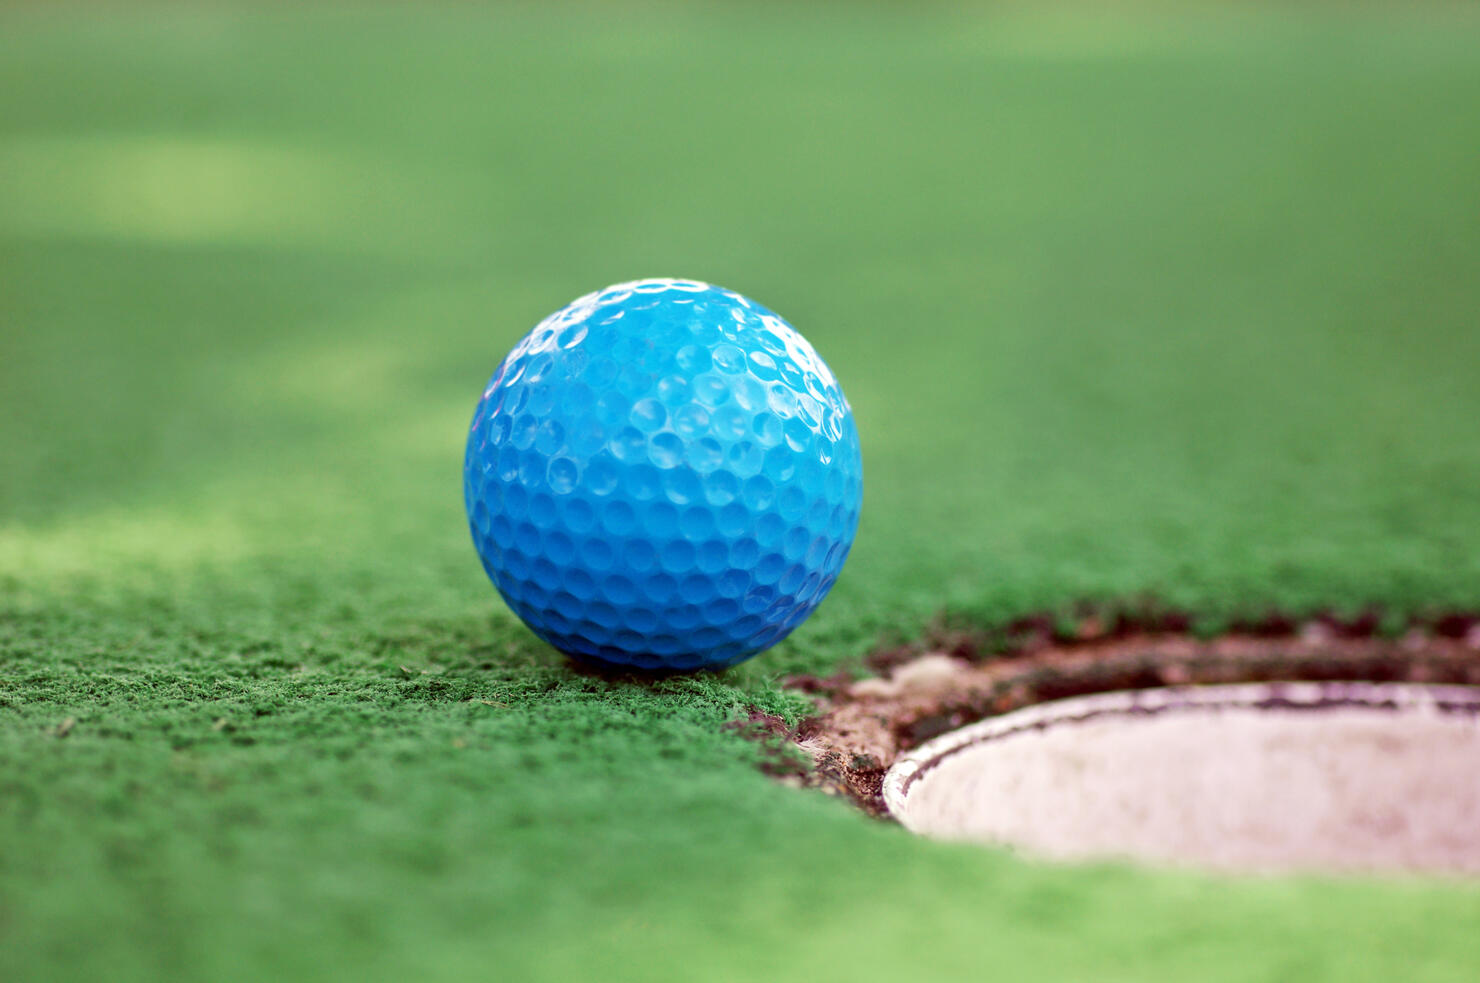 Blue Mini Golf Ball On Grass Near Hole